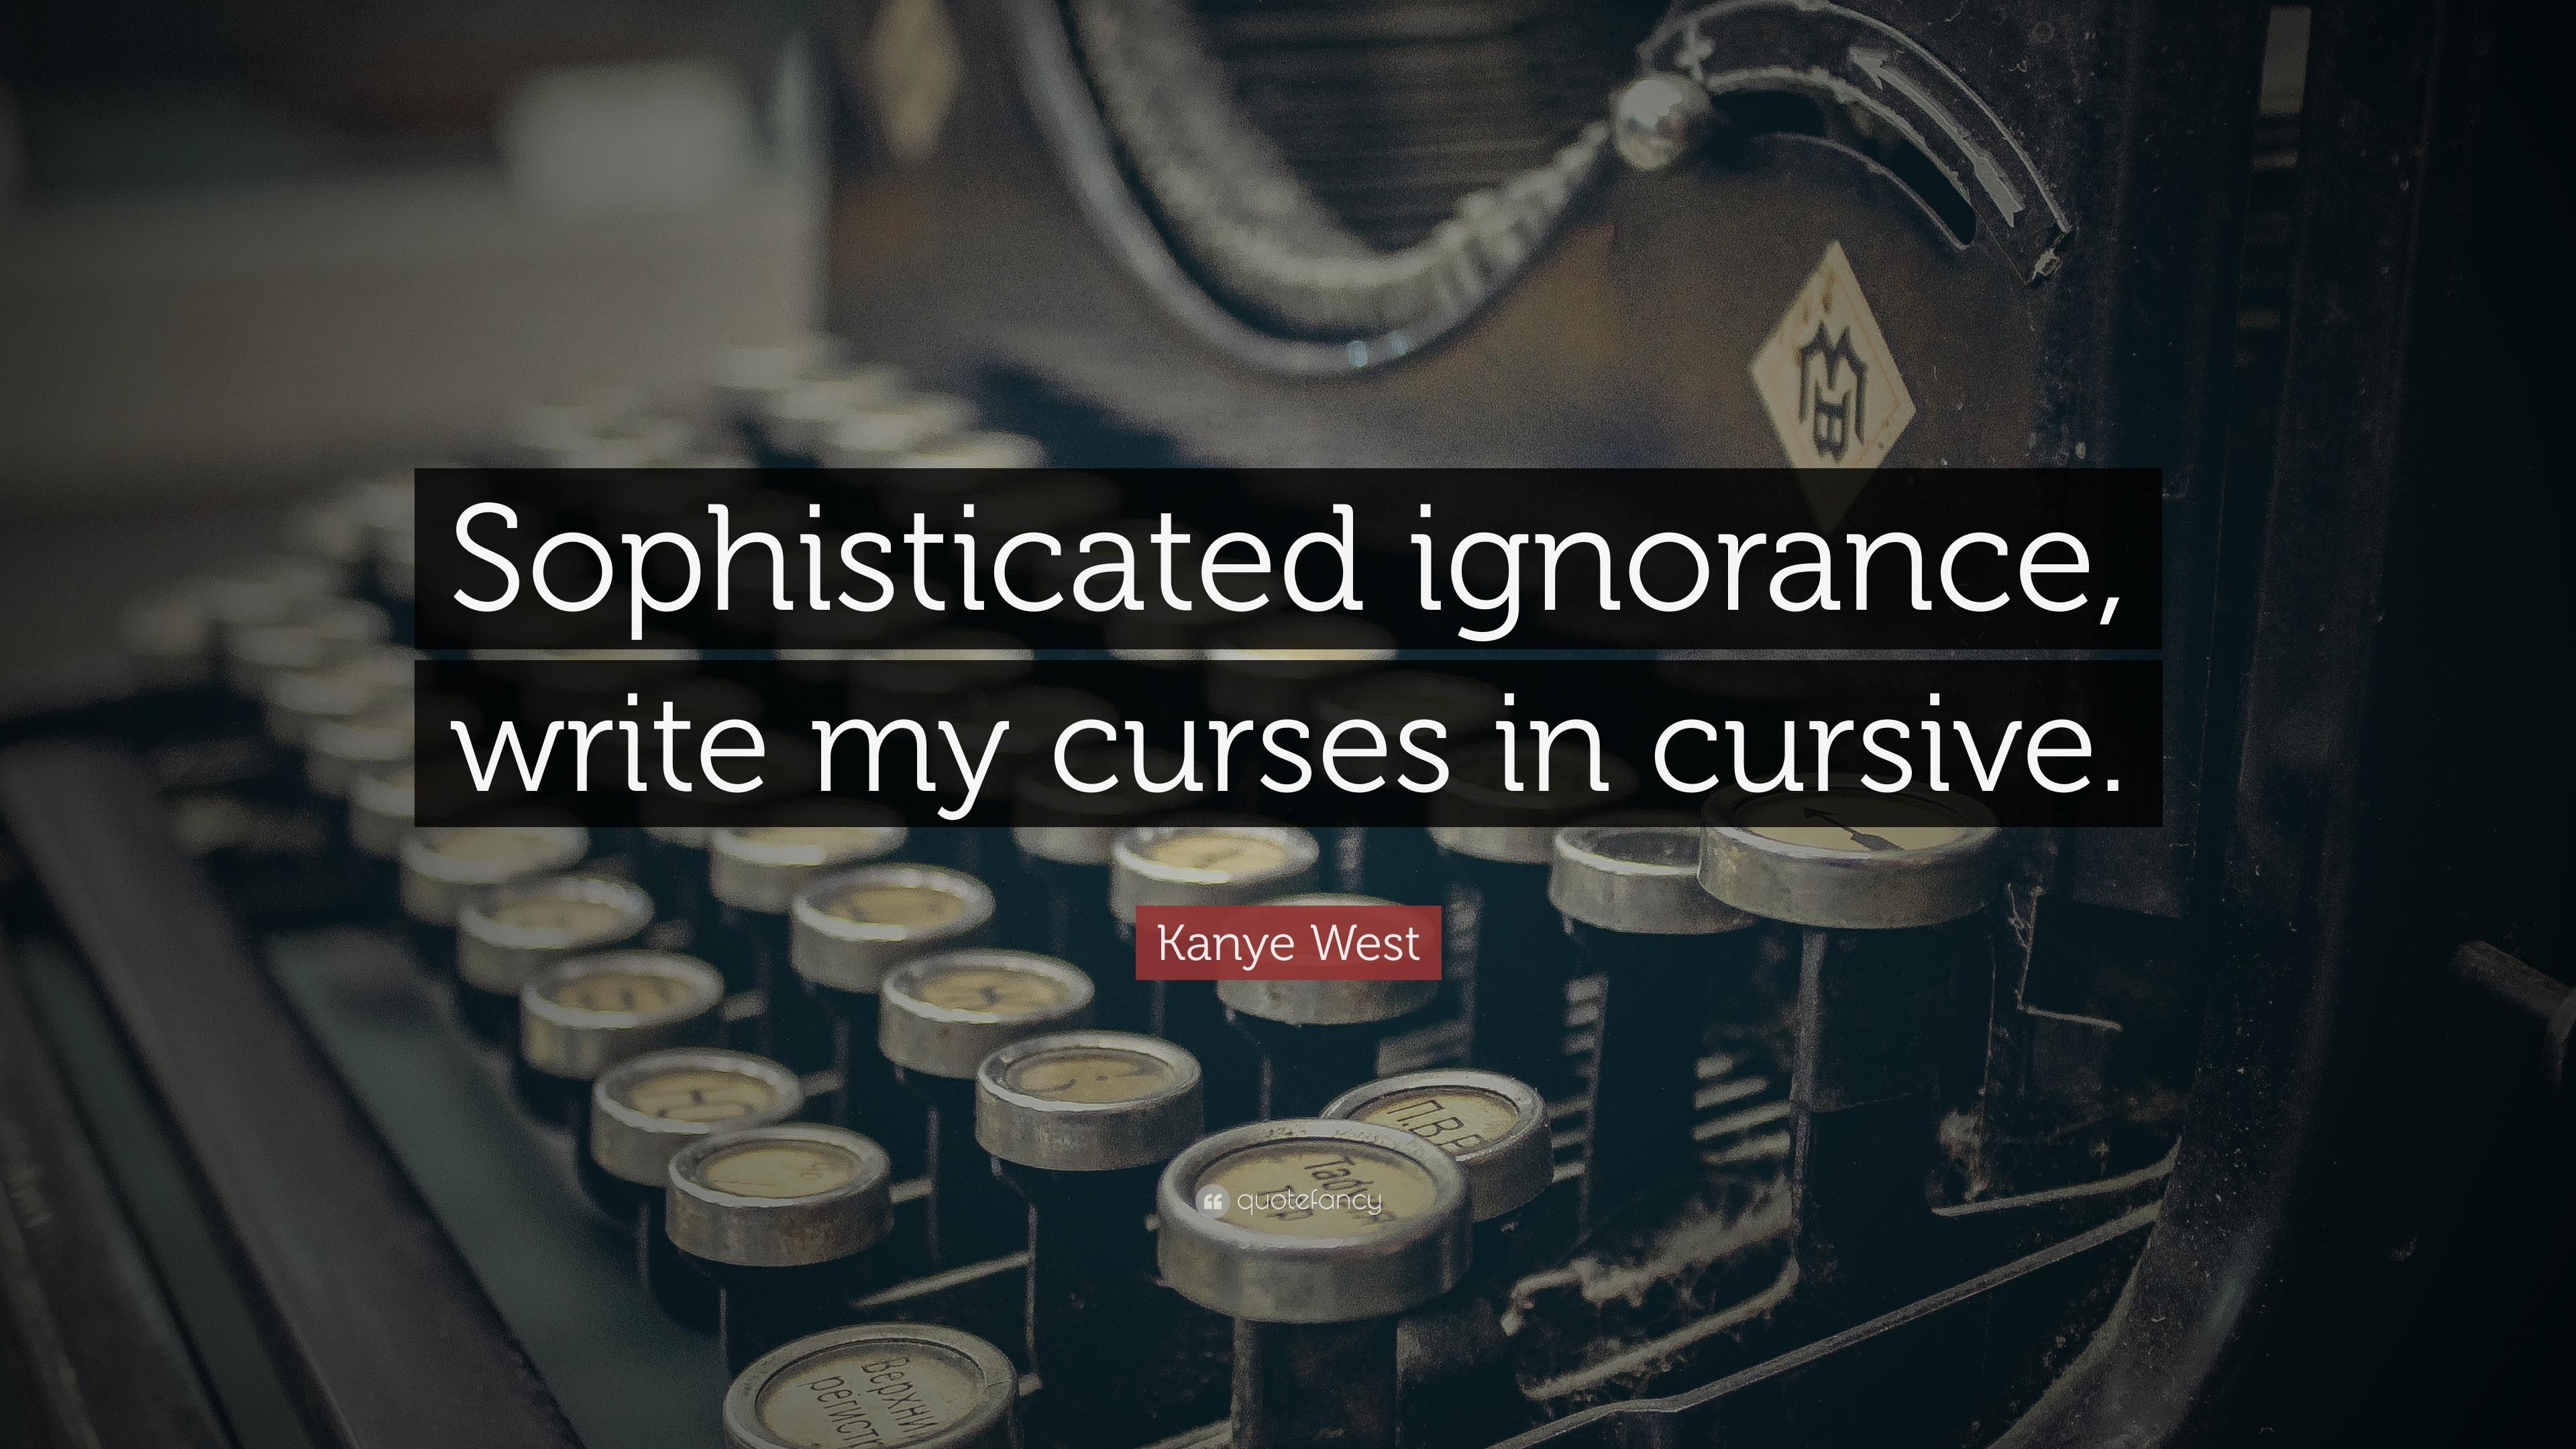 Kanye West Quote: “Sophisticated ignorance, write my curses